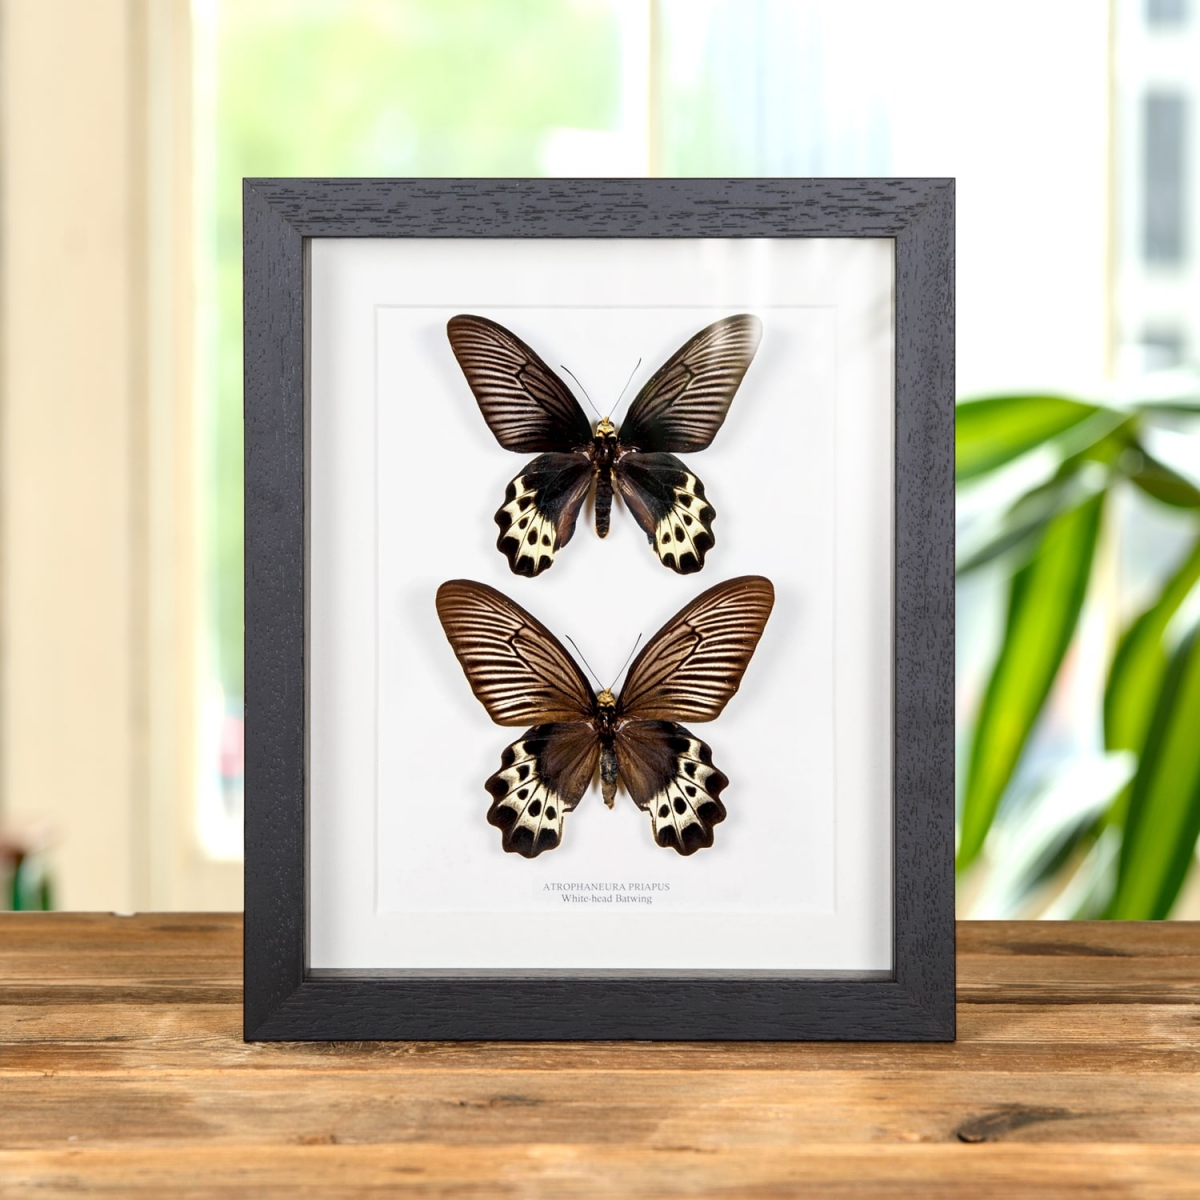 Minibeast White-Head Batwing Butterfly Male & Female In Box Frame (Atrophaneura priapus)